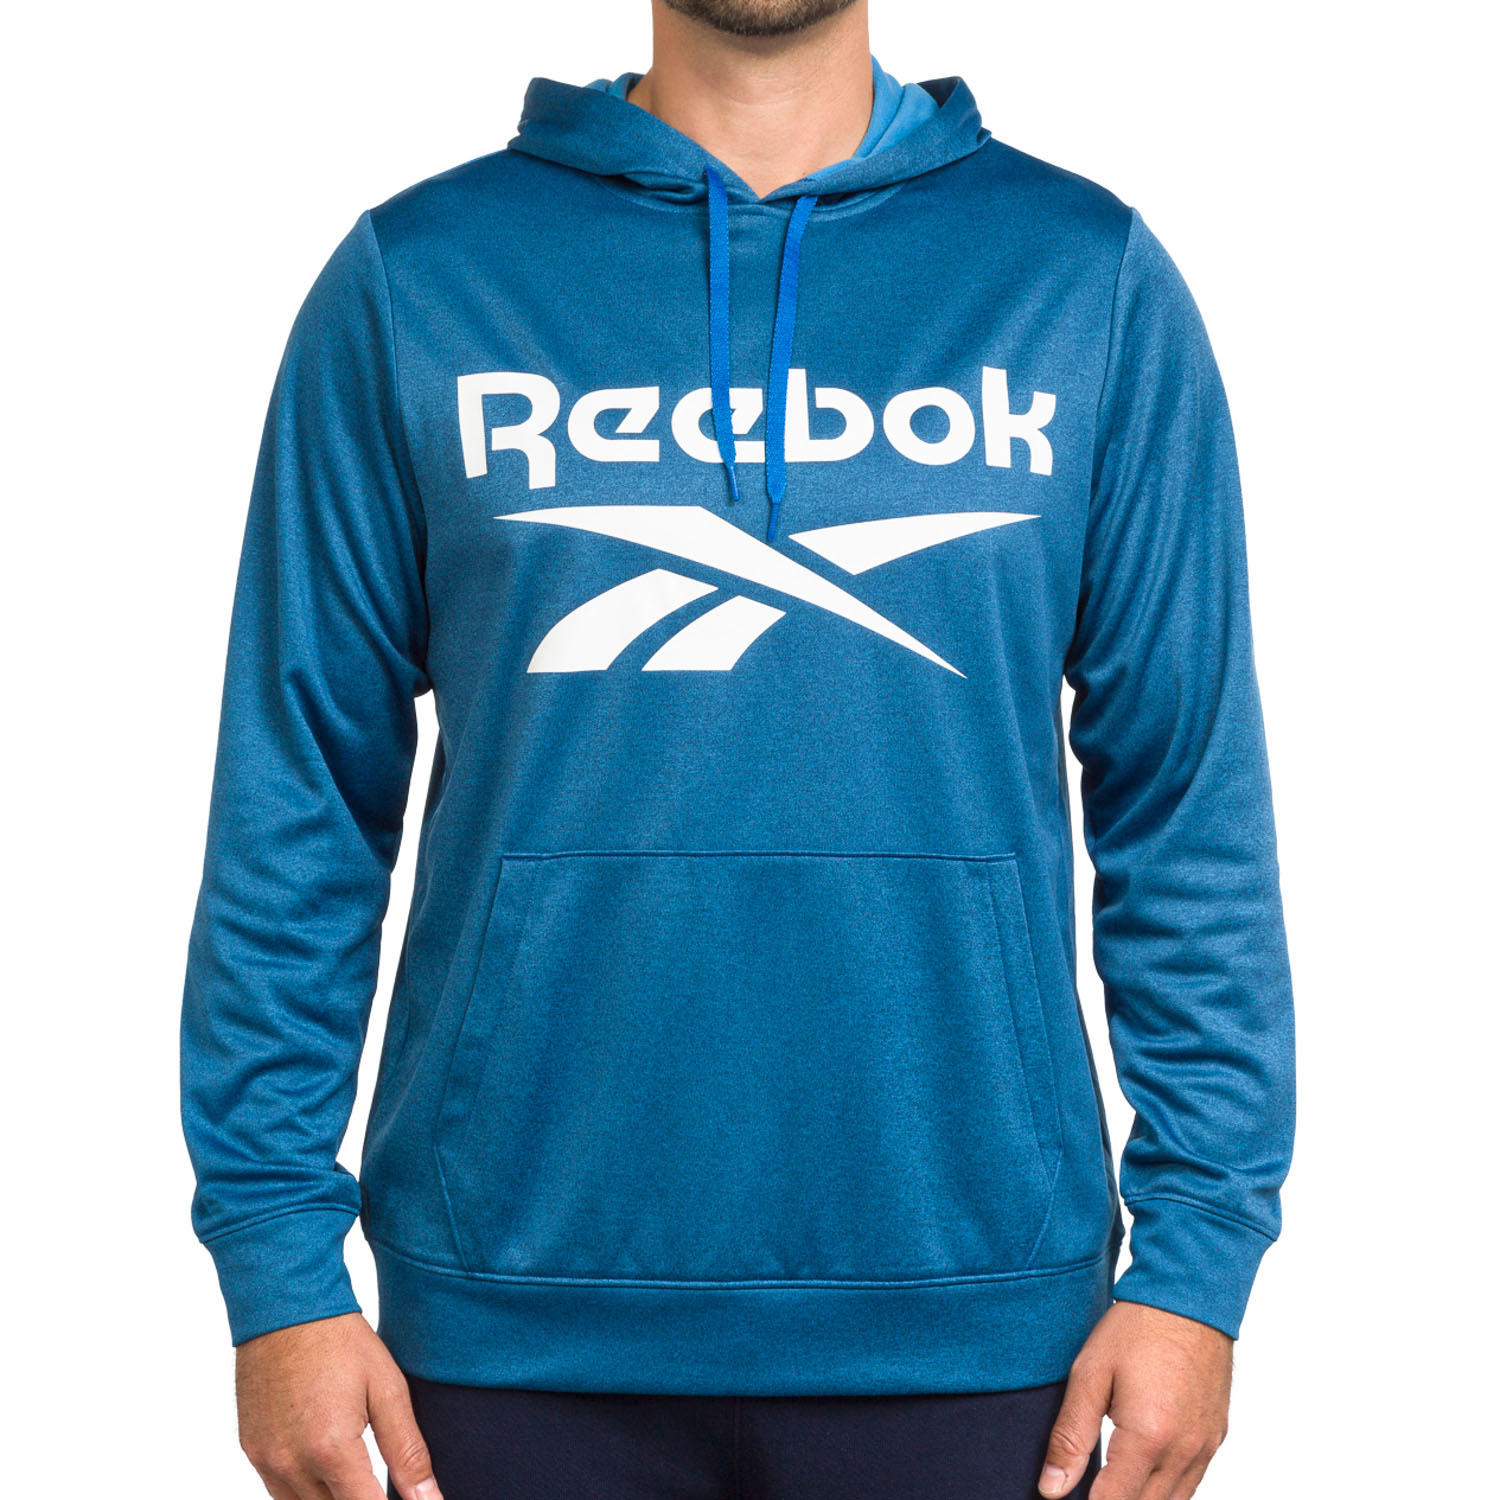 Men’s Reebok Tech Fleece Hoodie for $9.81